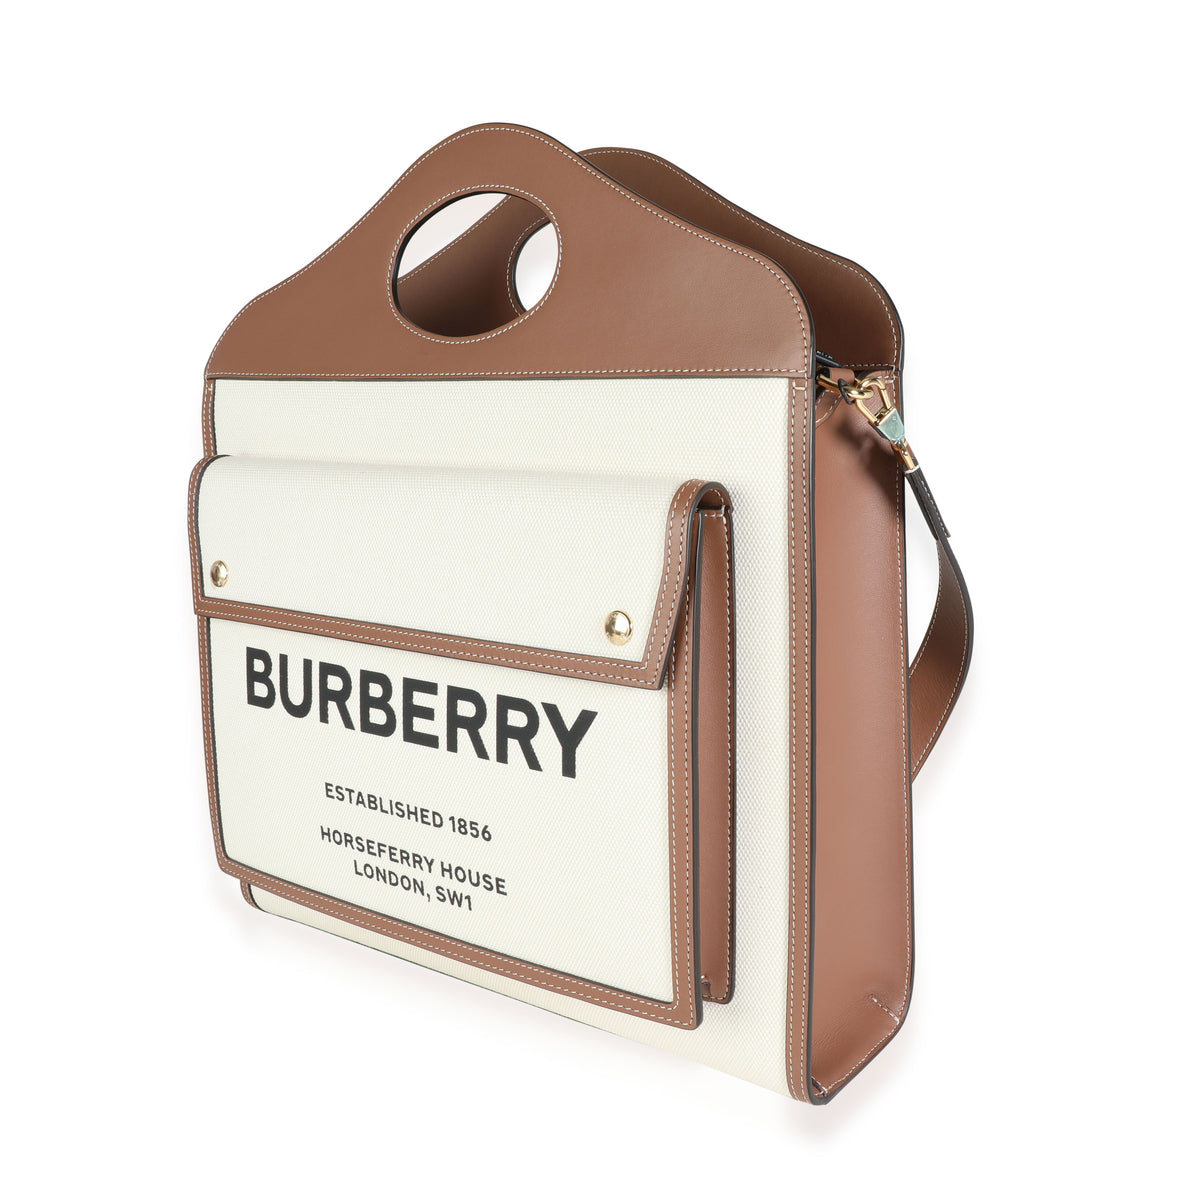 Mini TB Bucket Bag in Natural/malt Brown - Women | Burberry® Official